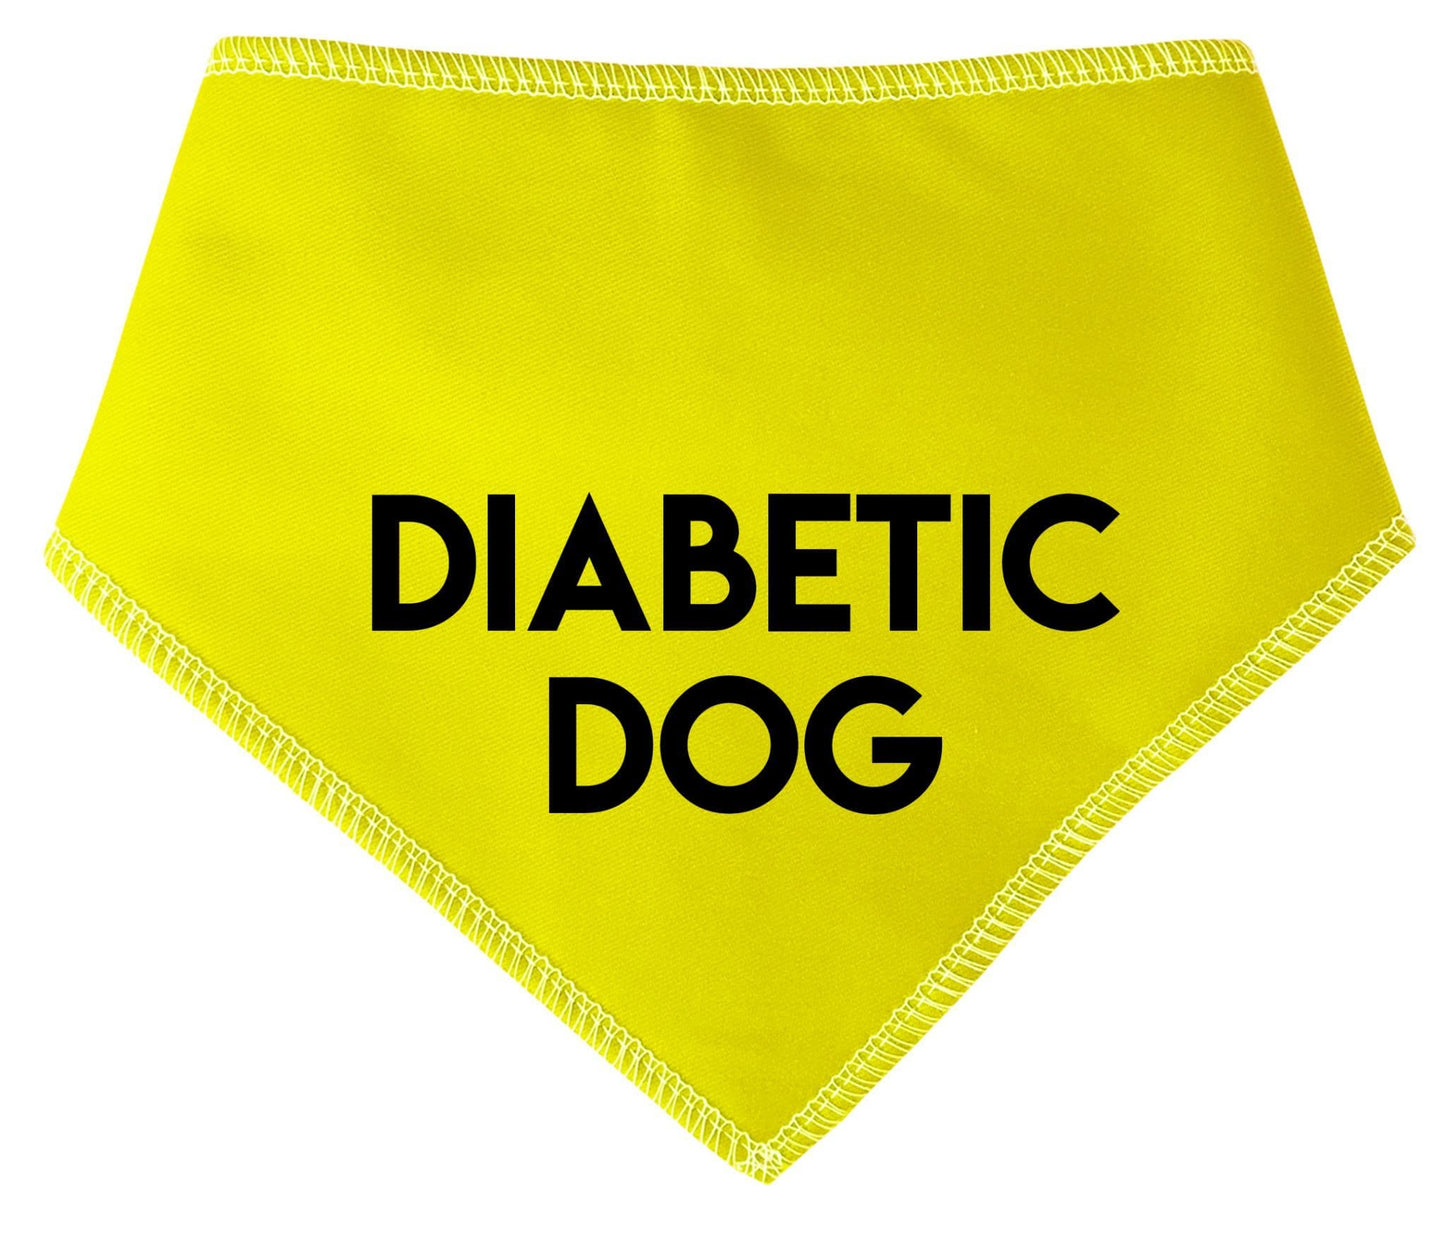 'Diabetic Dog' Alert Dog Bandana